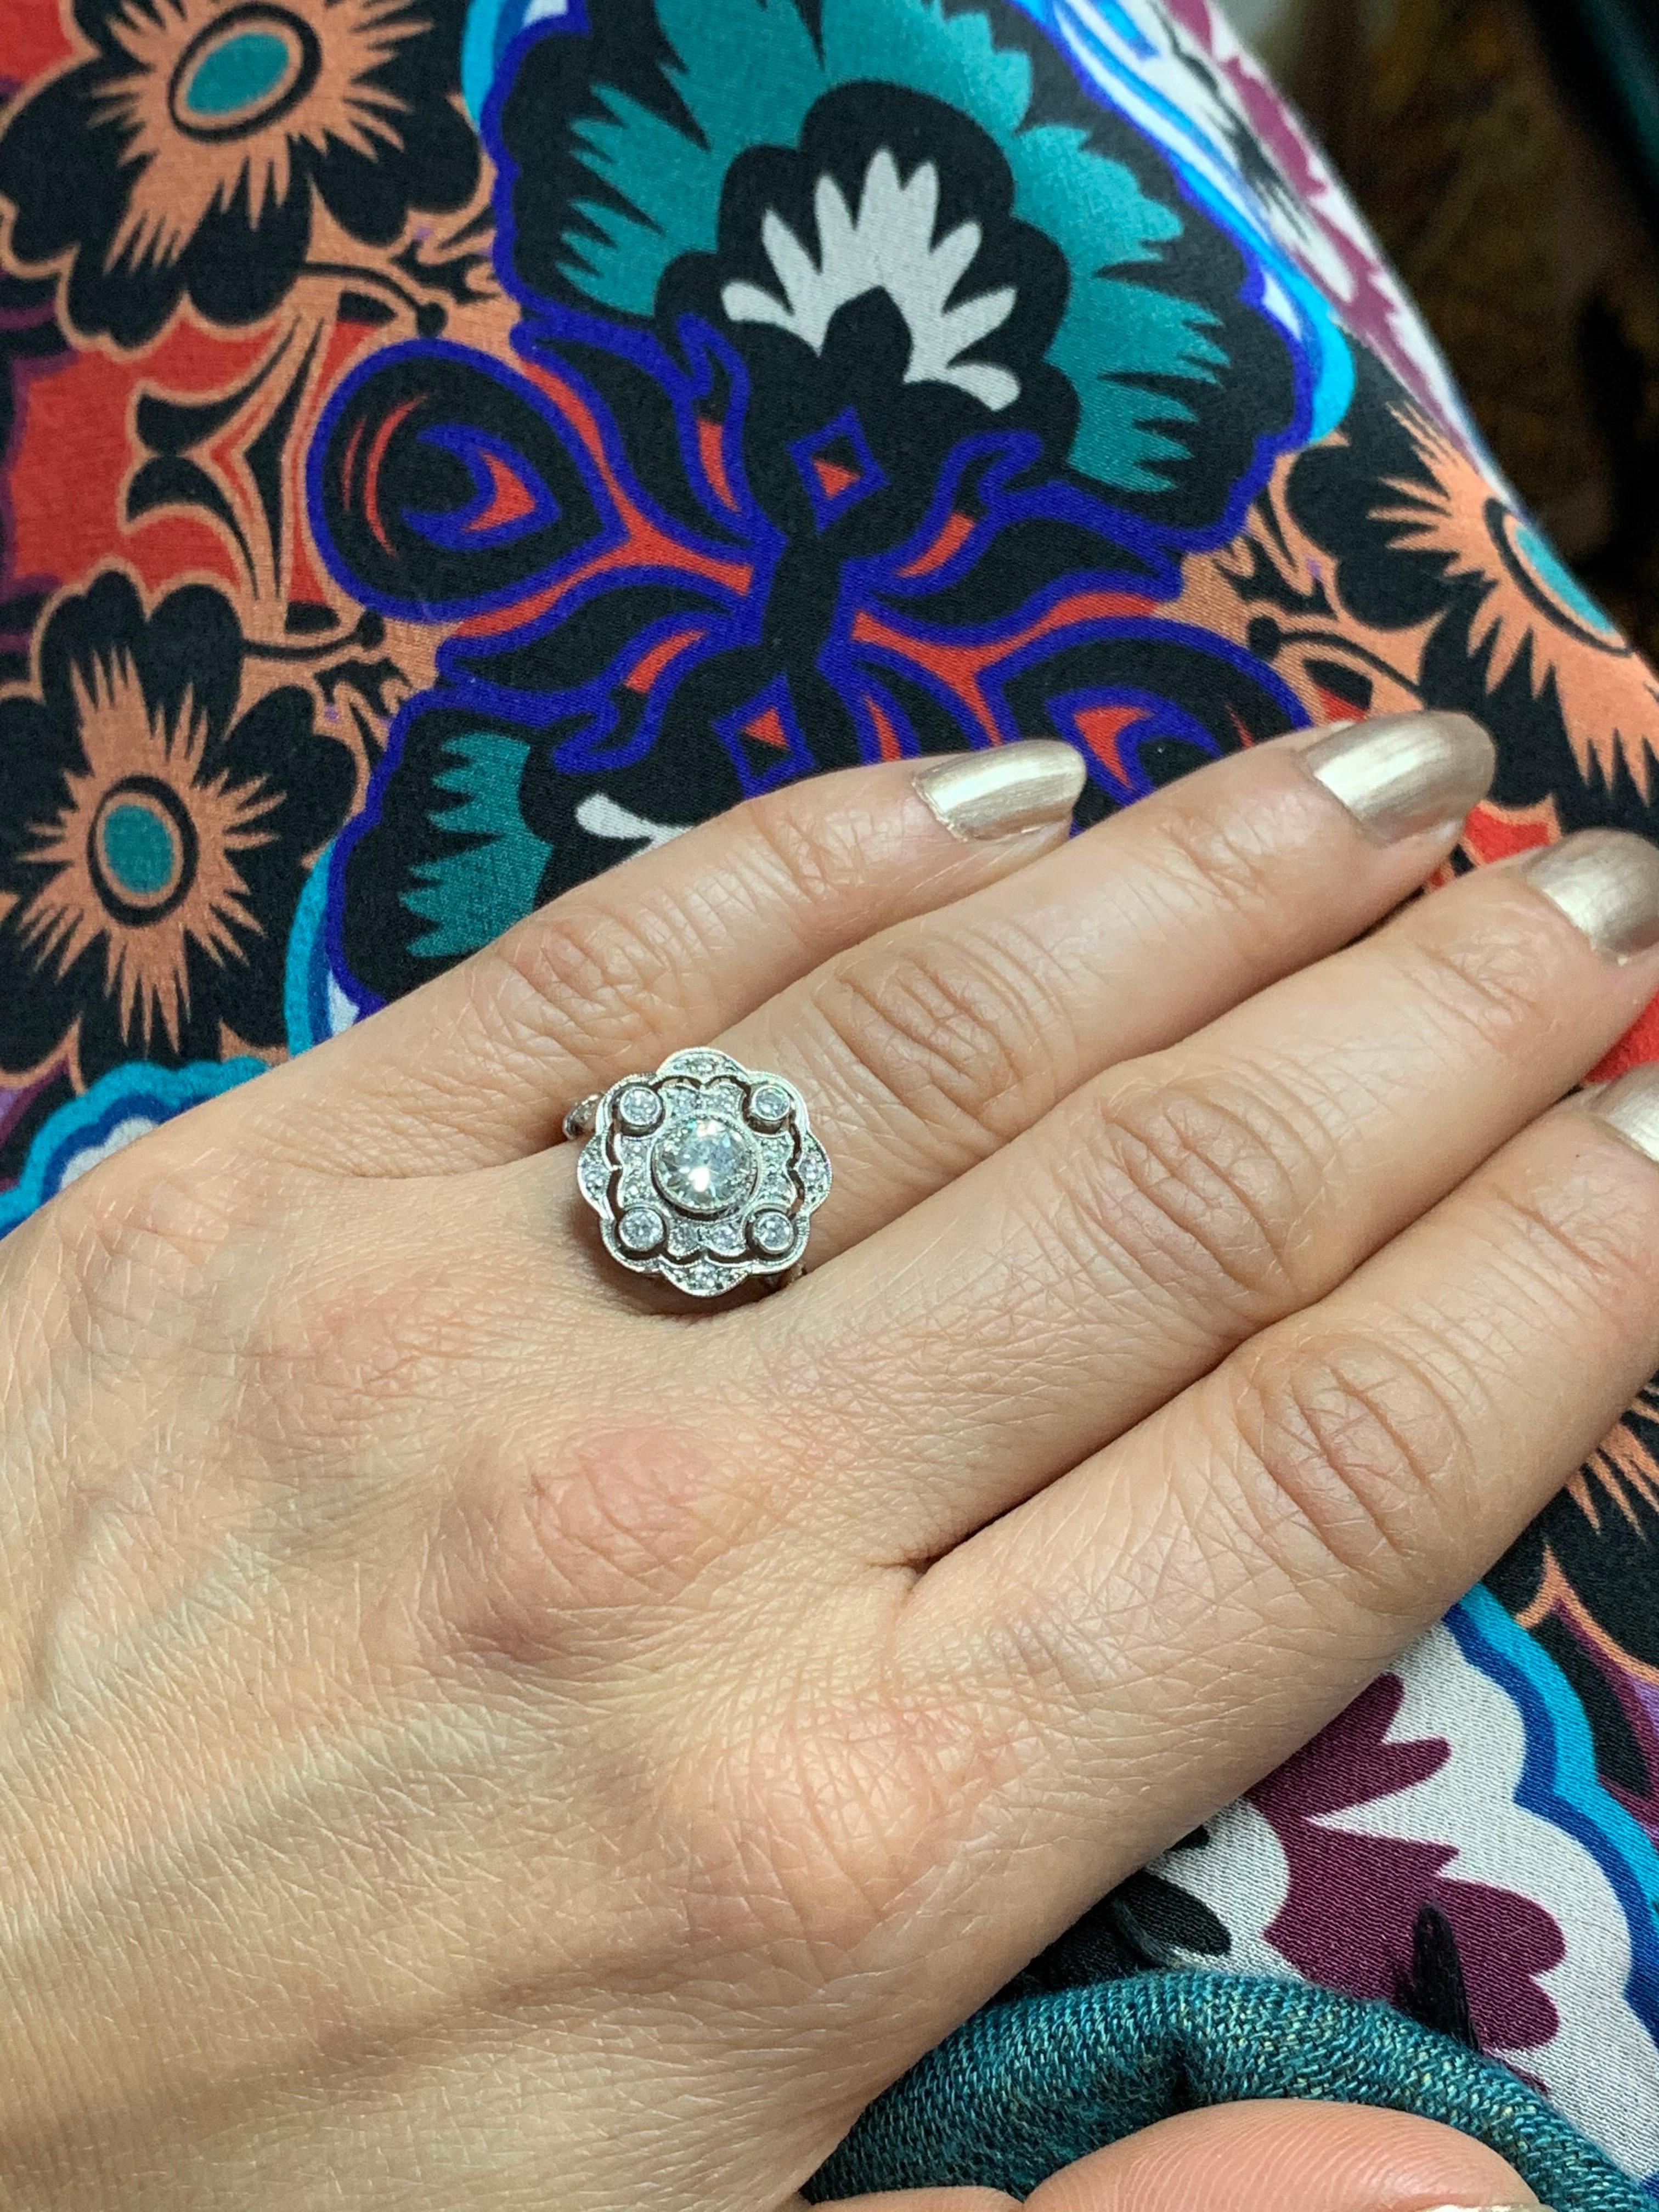 Old European Cut Diamond Engagement Ring in Platinum For Sale 6